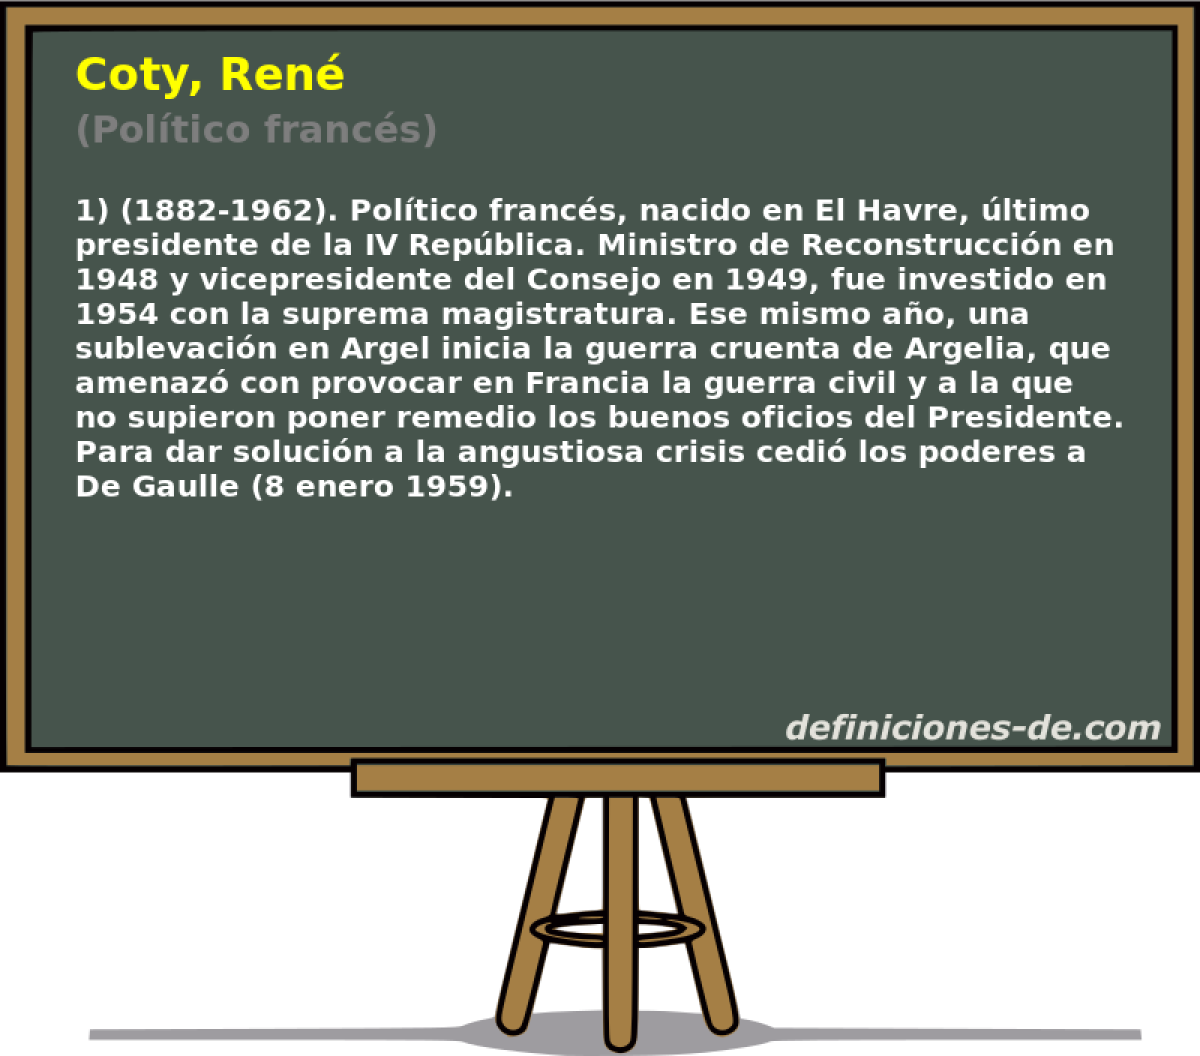 Coty, Ren (Poltico francs)